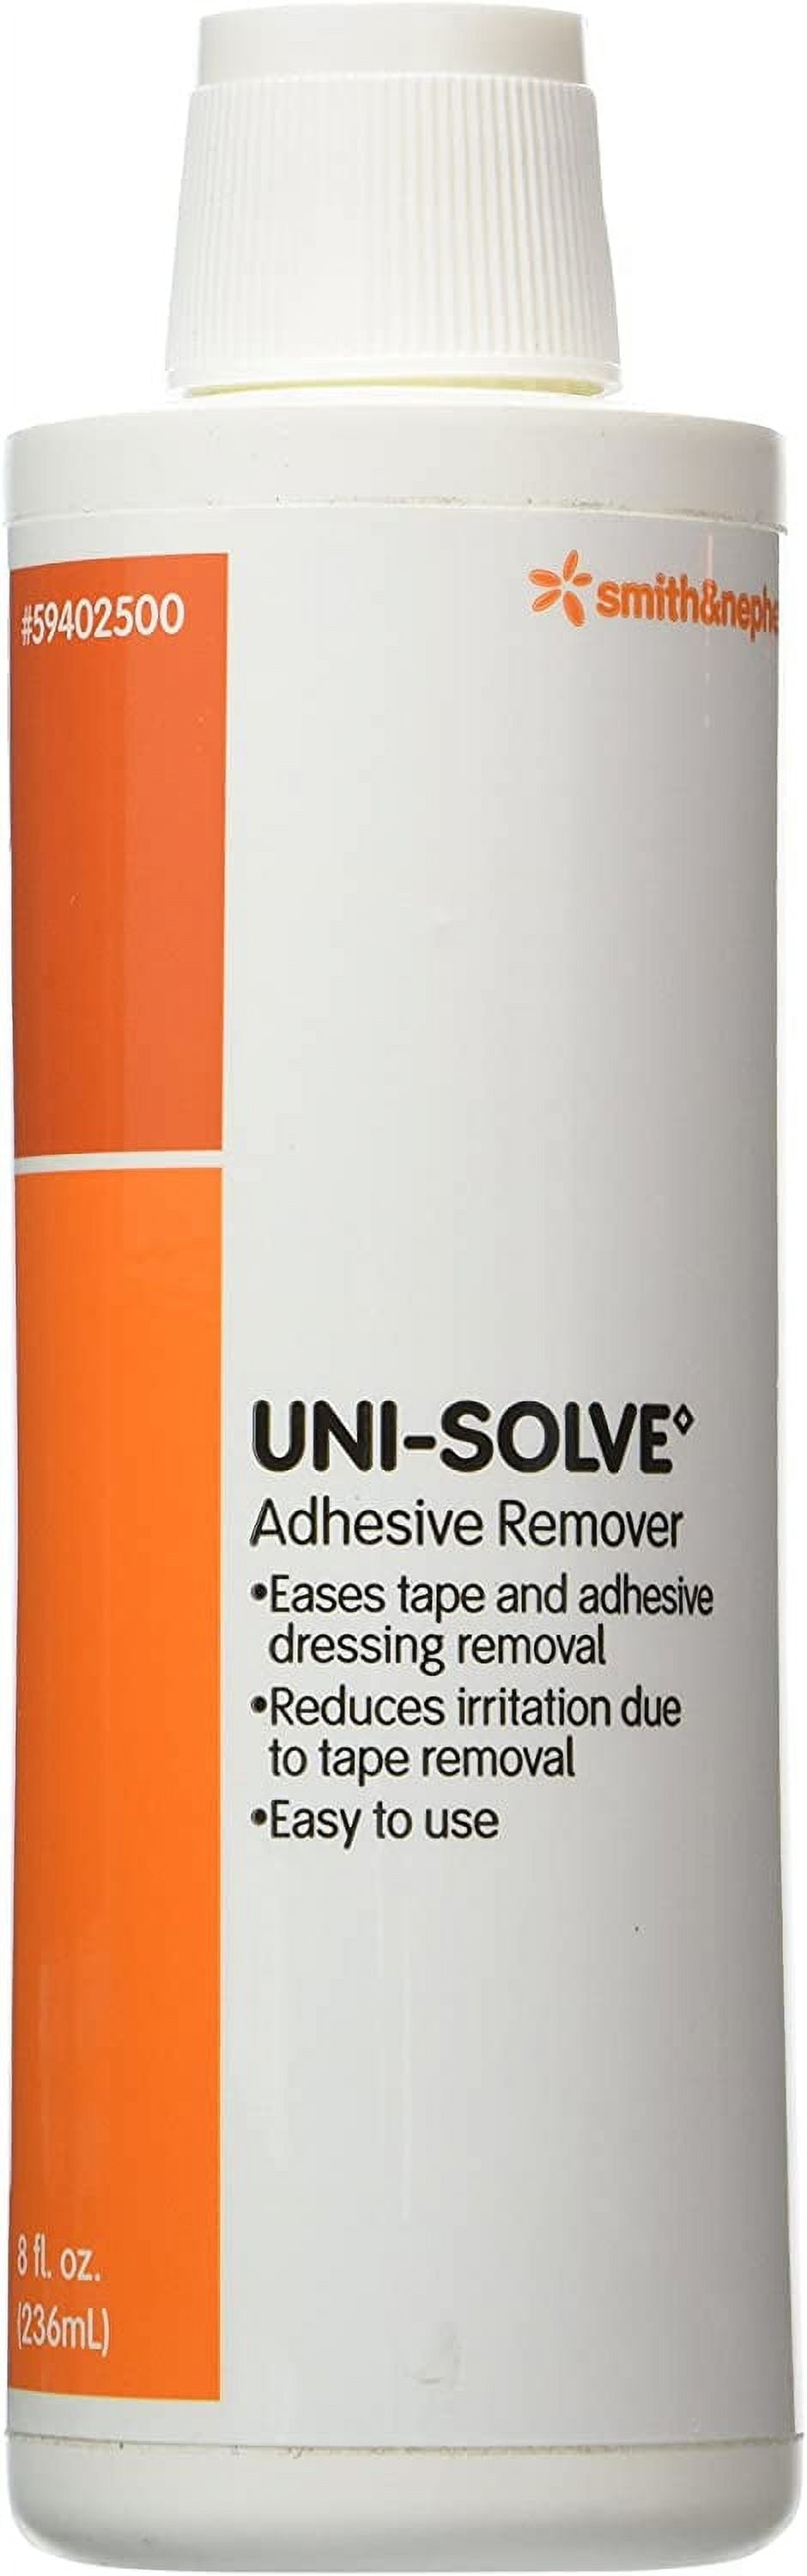 Uni-Solve Adhesive Remover Case of 1000